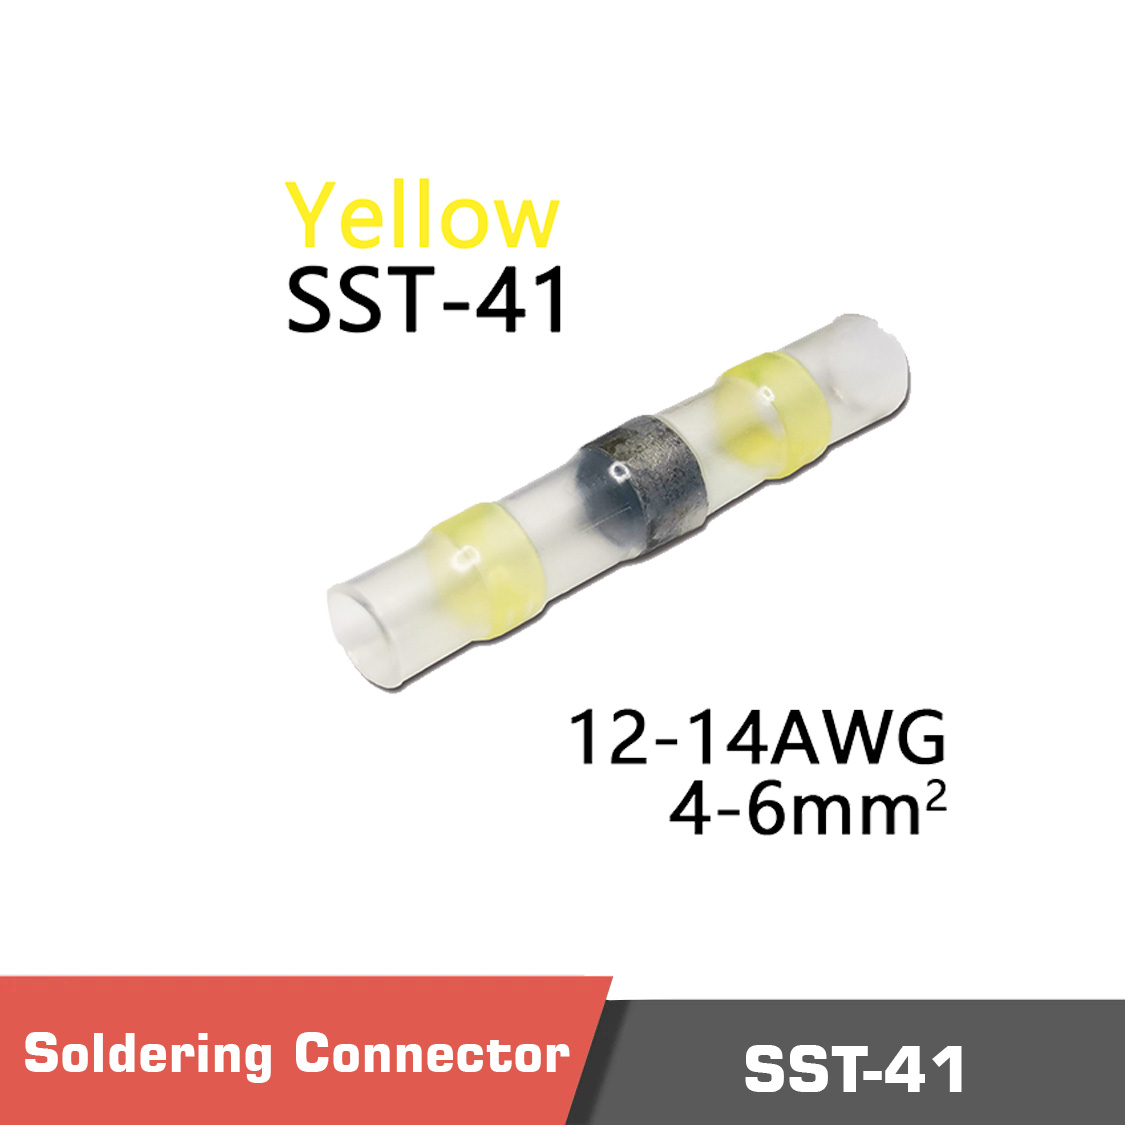 Sst 41 - sst-51,sst-51 soldering connector,soldering connector - motionew - 13